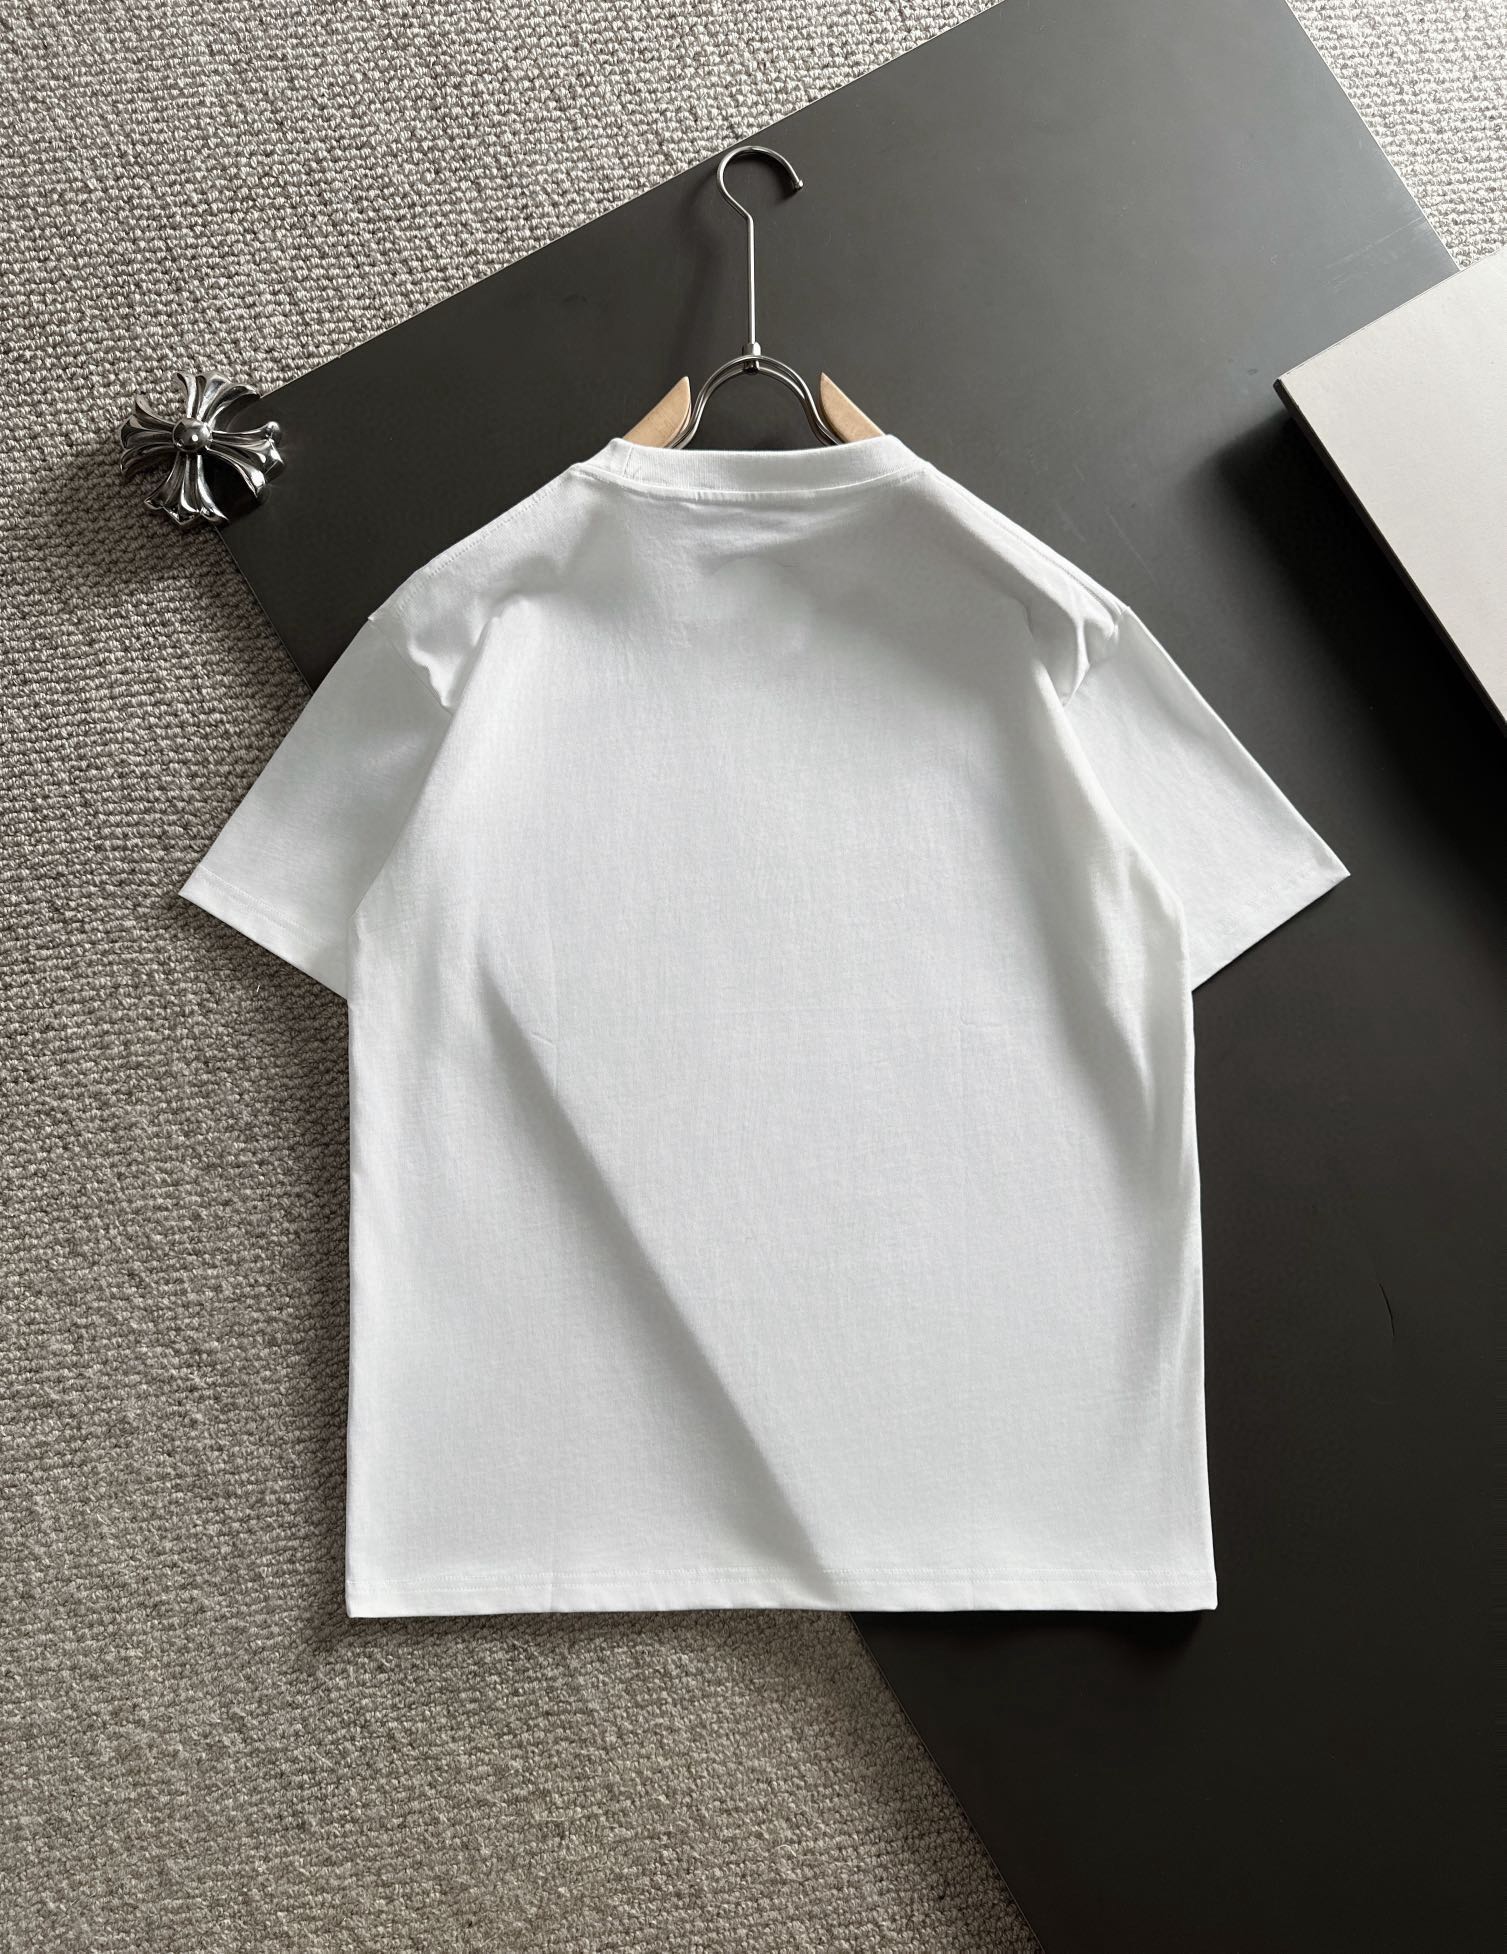 HOT 定番 新着ディオールレディースtシャツコピー シンプル 洗練されたスタイル_7